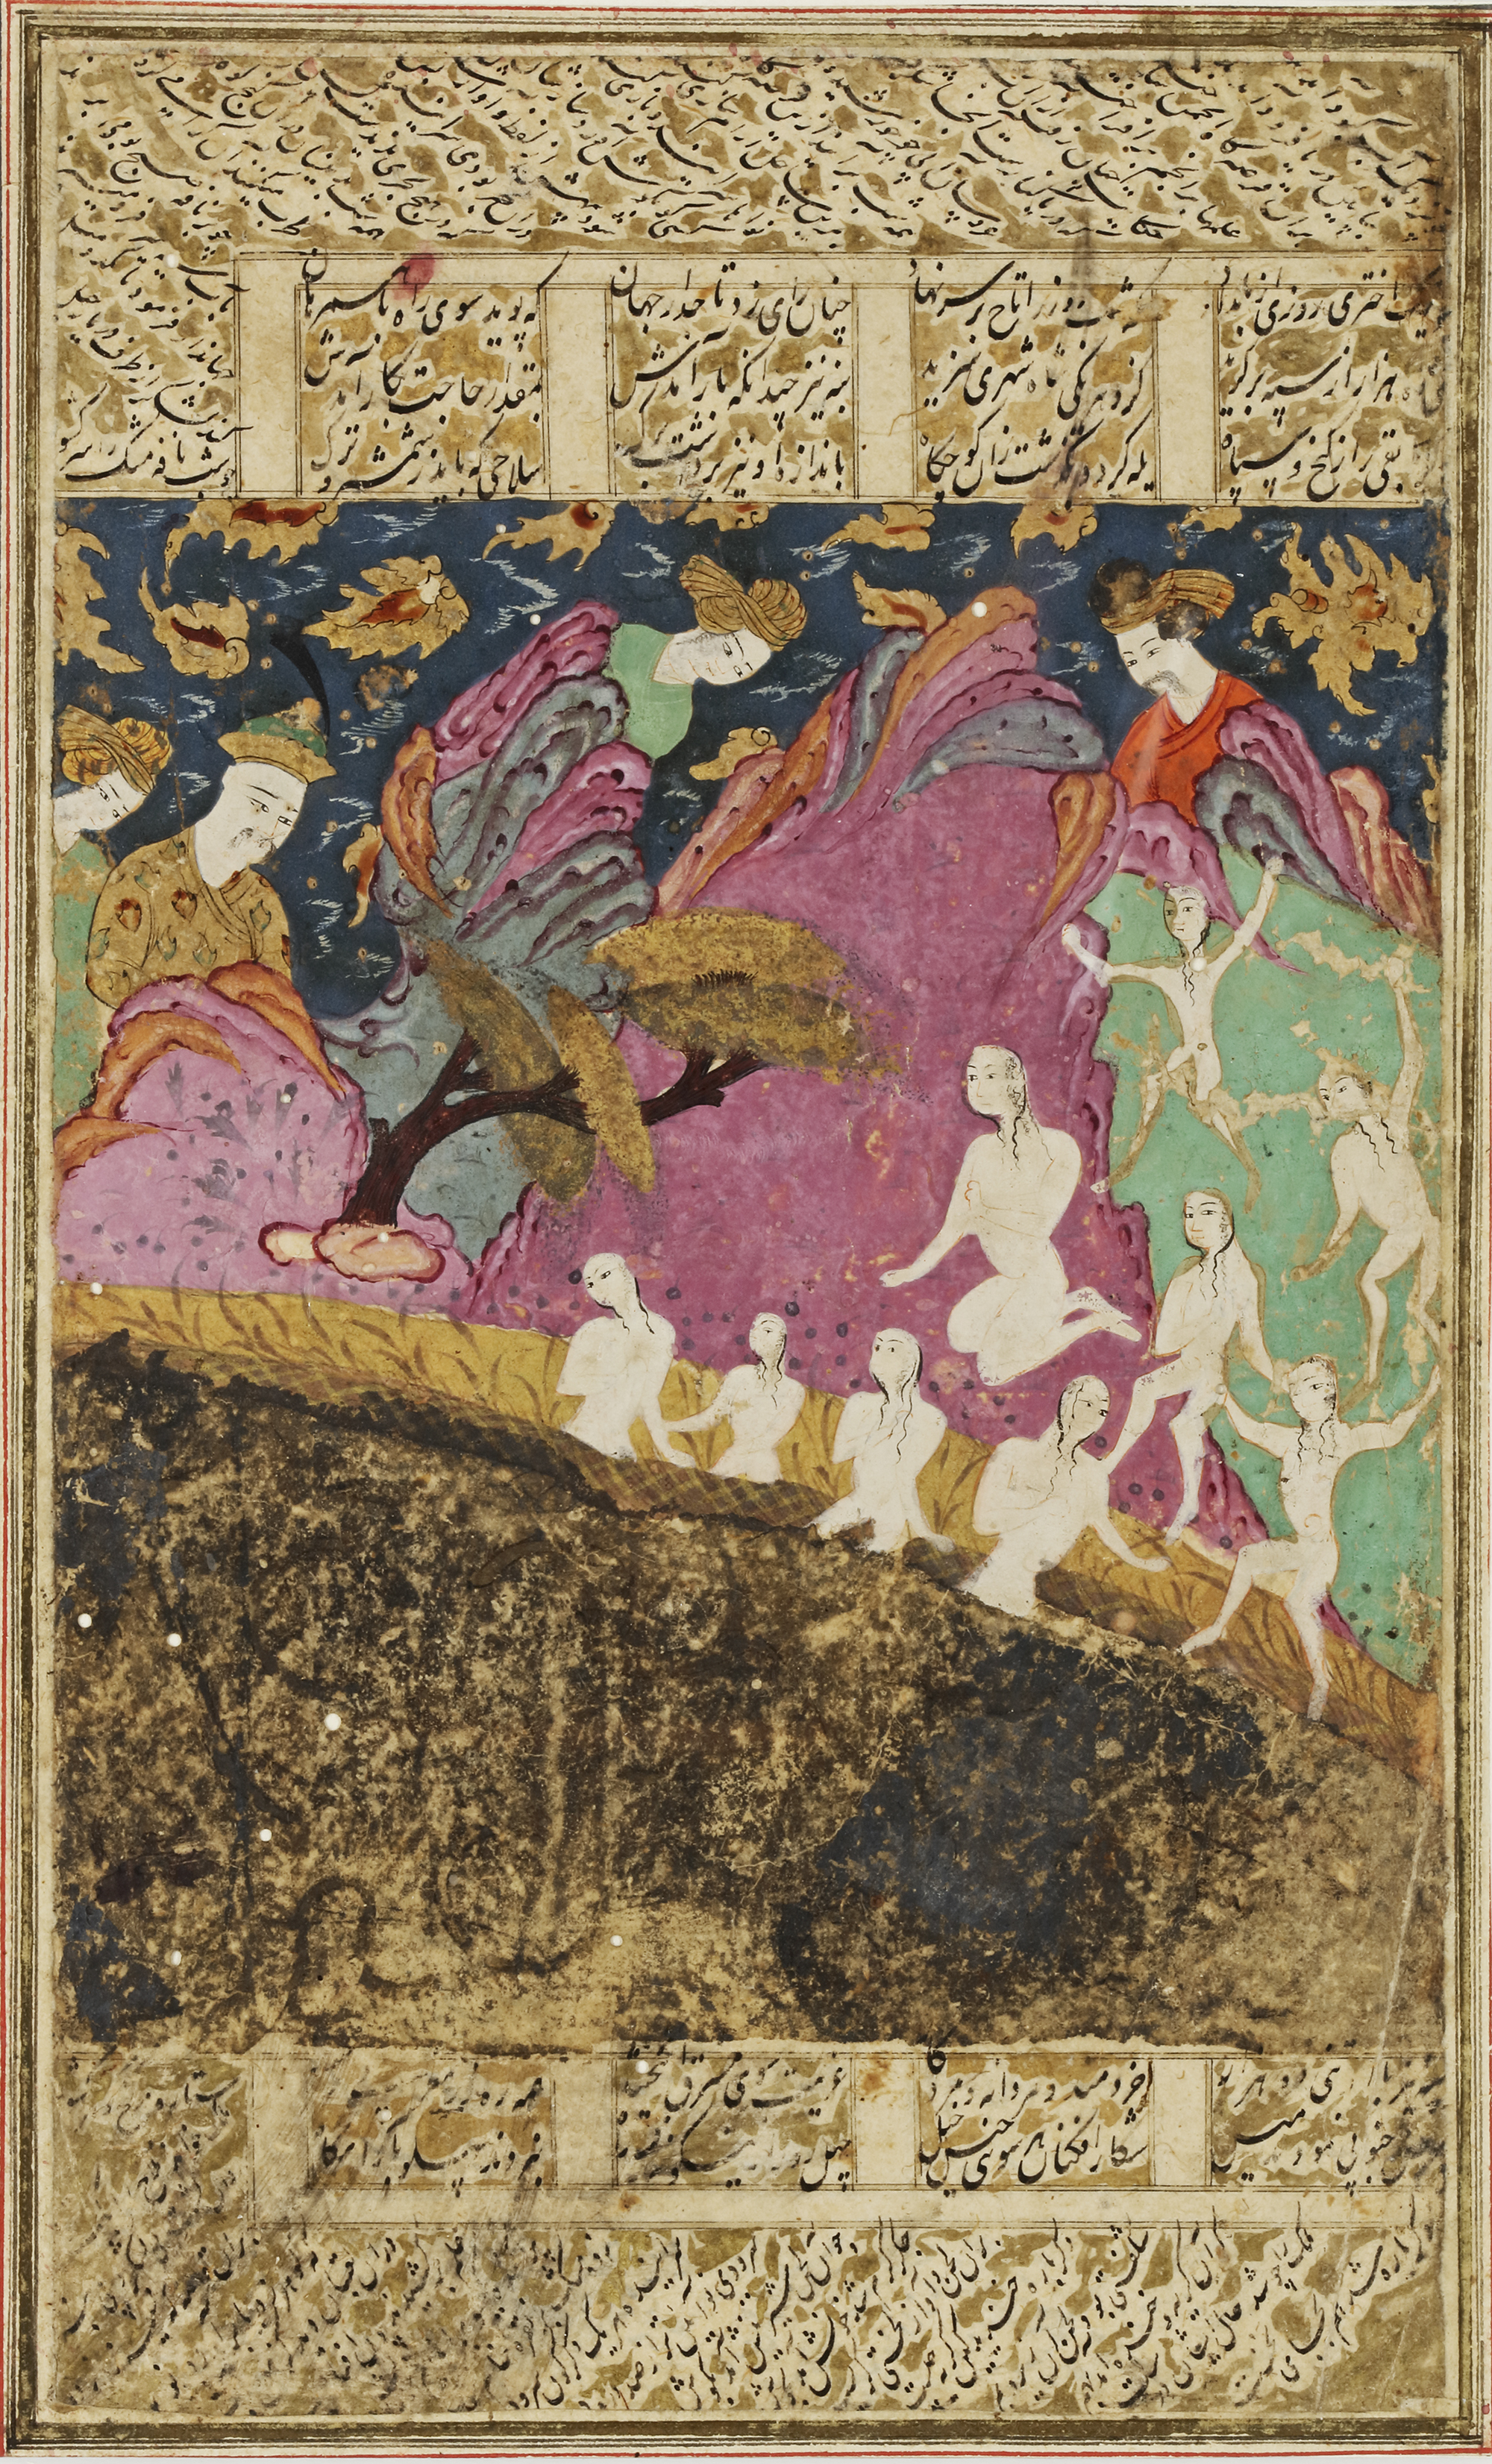 ISKANDER WATCHES THE MERMAIDS IN THE BATH, PERSIA SAFAVID, 18TH CENTURY